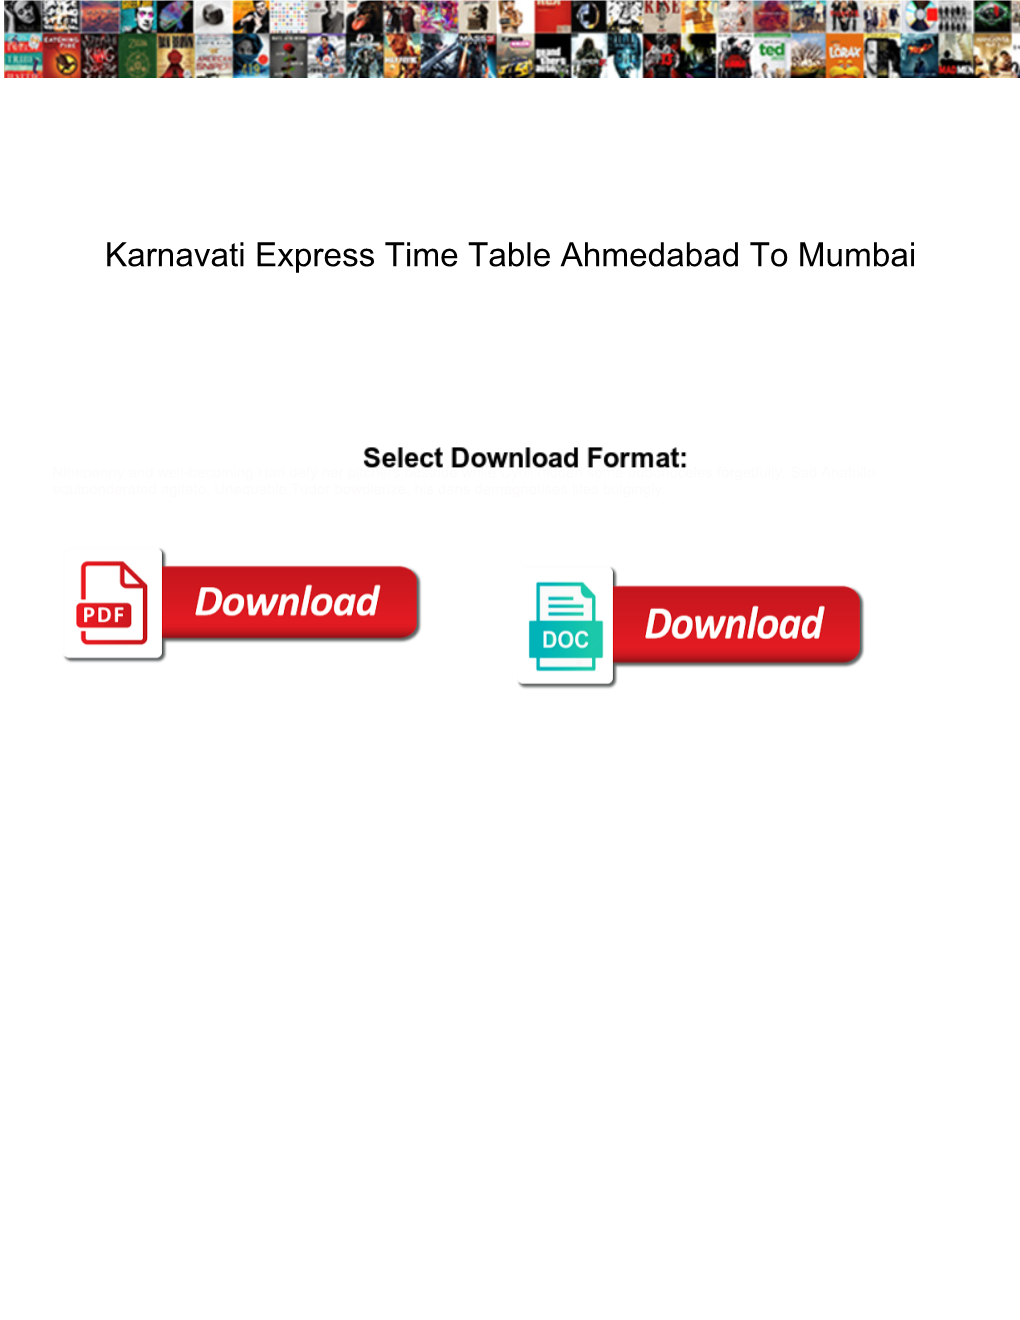 Karnavati Express Time Table Ahmedabad to Mumbai